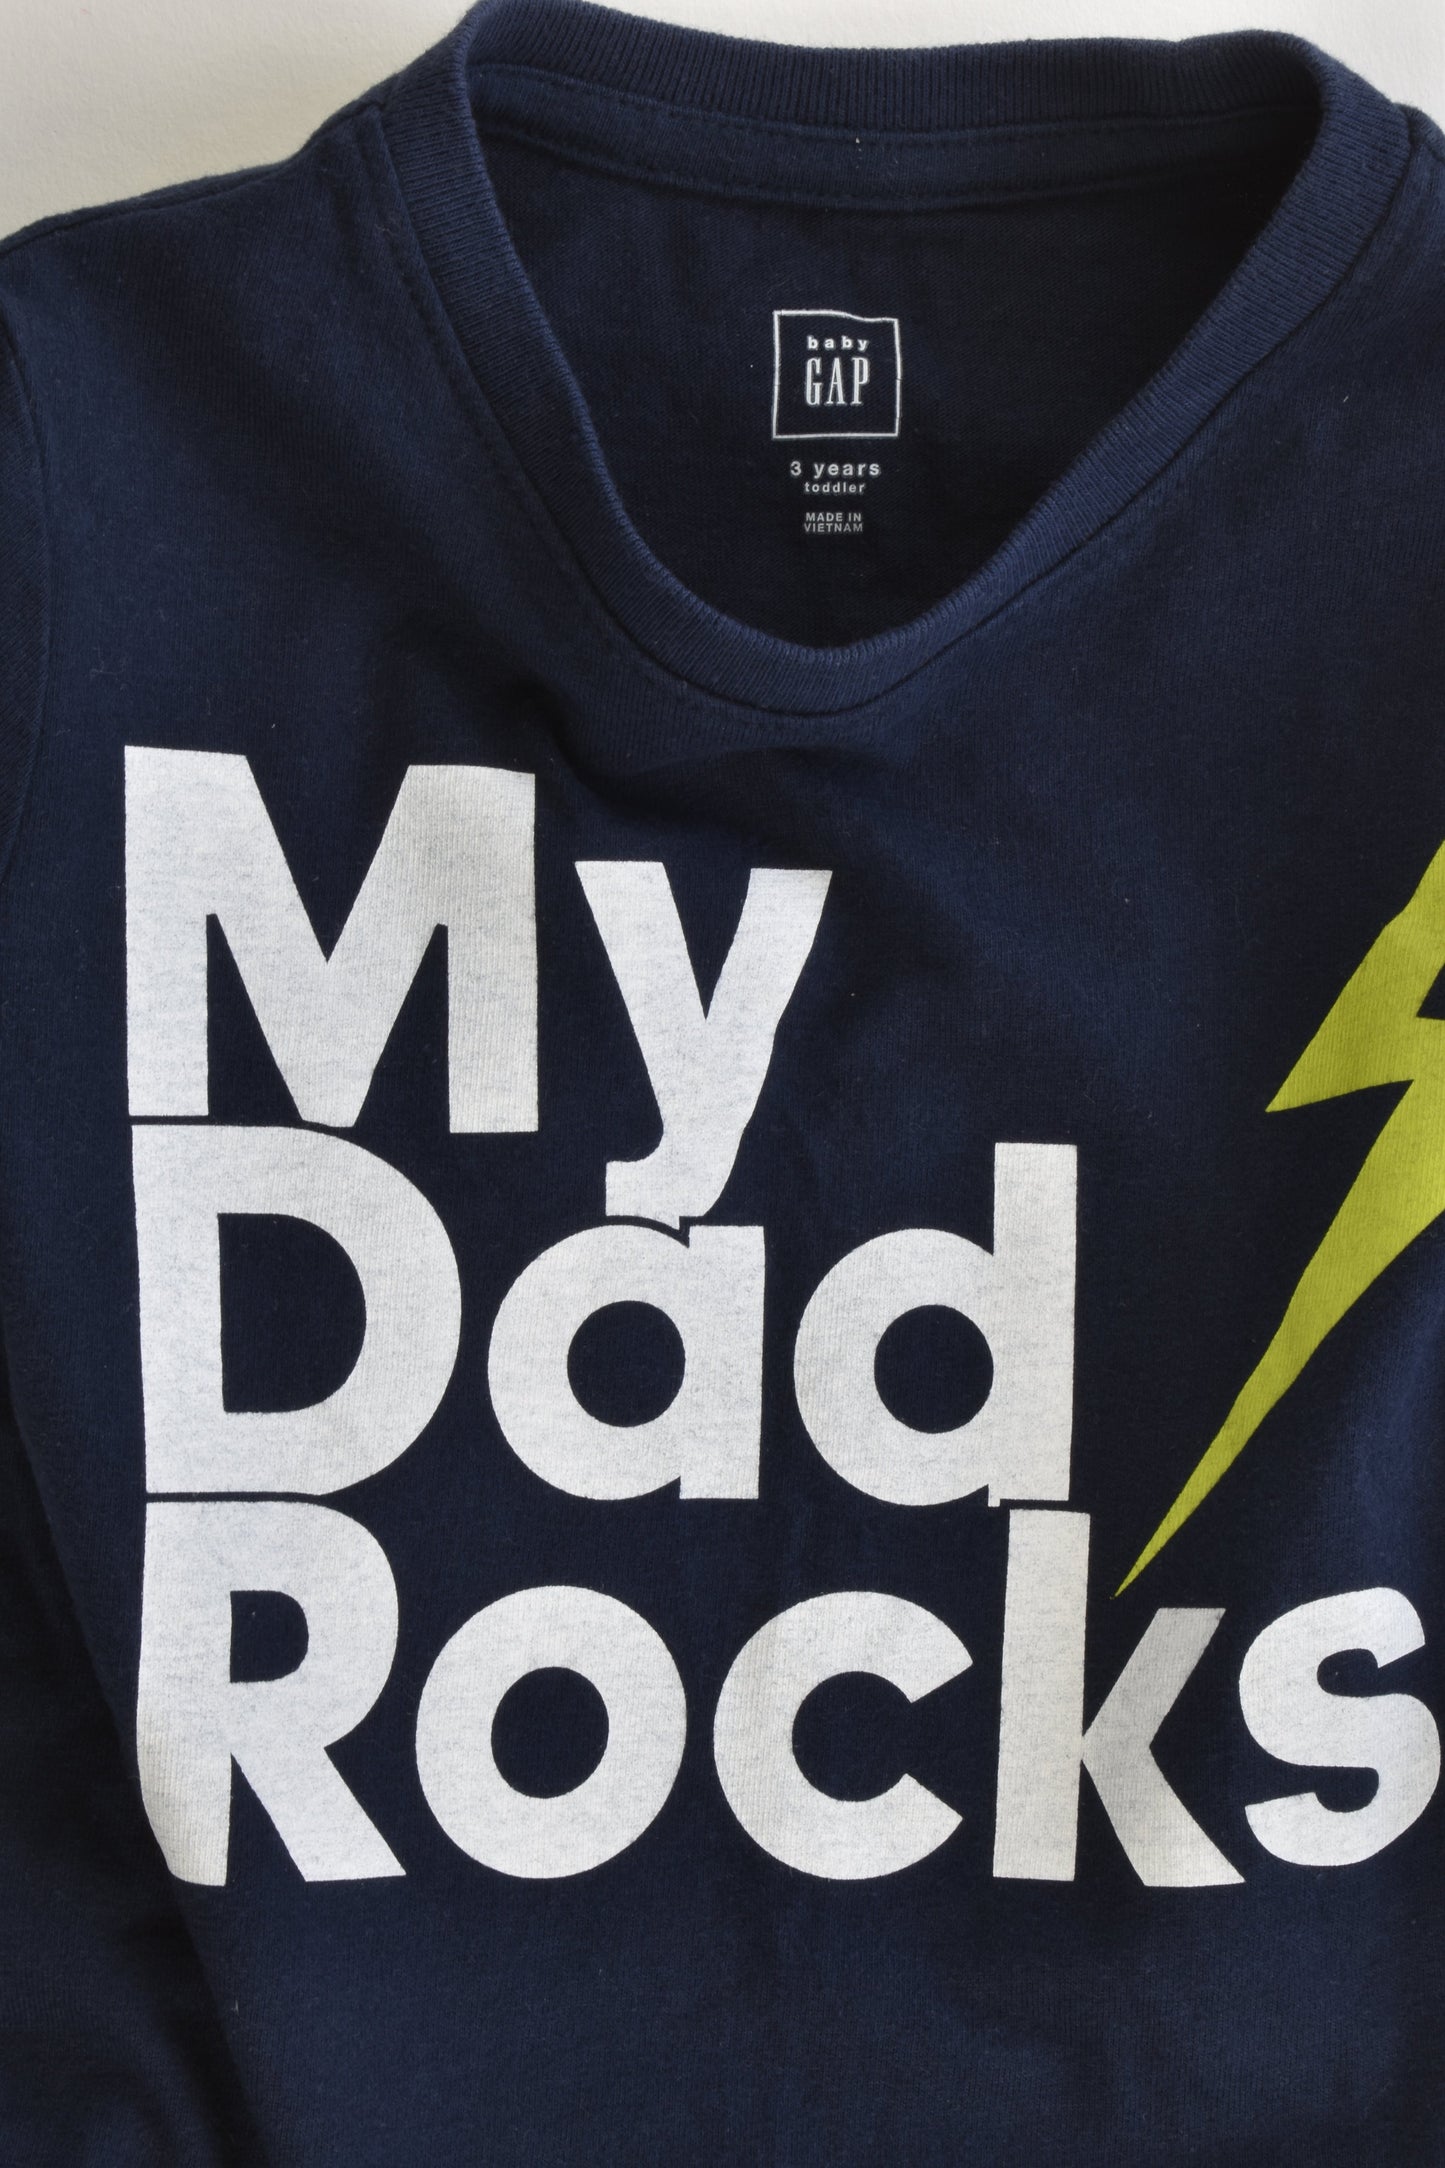 Baby Gap Size 3 "My Dad Rocks" T-shirt